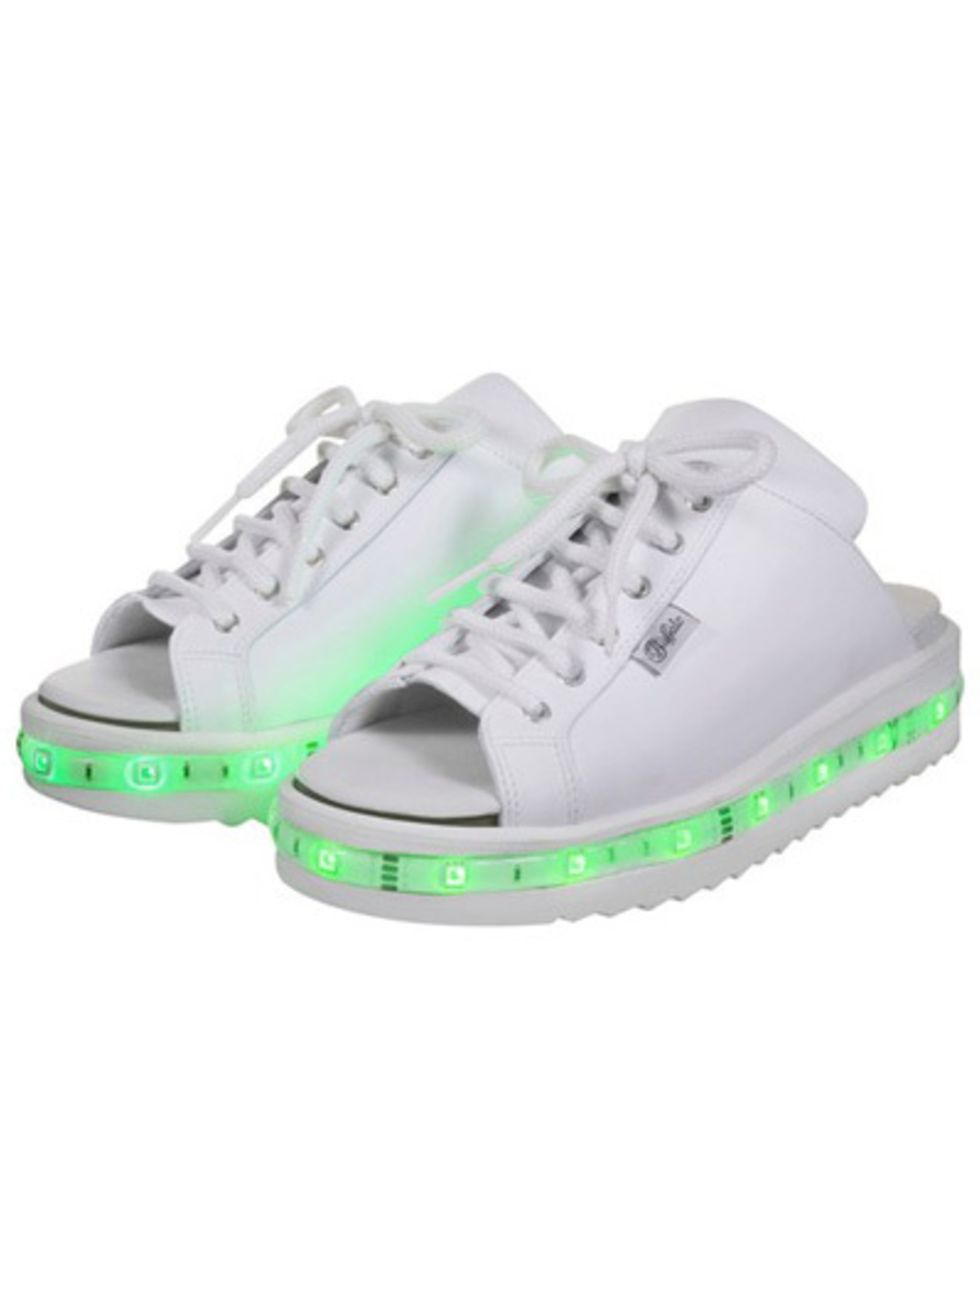 Footwear, Product, Green, Shoe, Athletic shoe, White, Sneakers, Light, Aqua, Teal, 